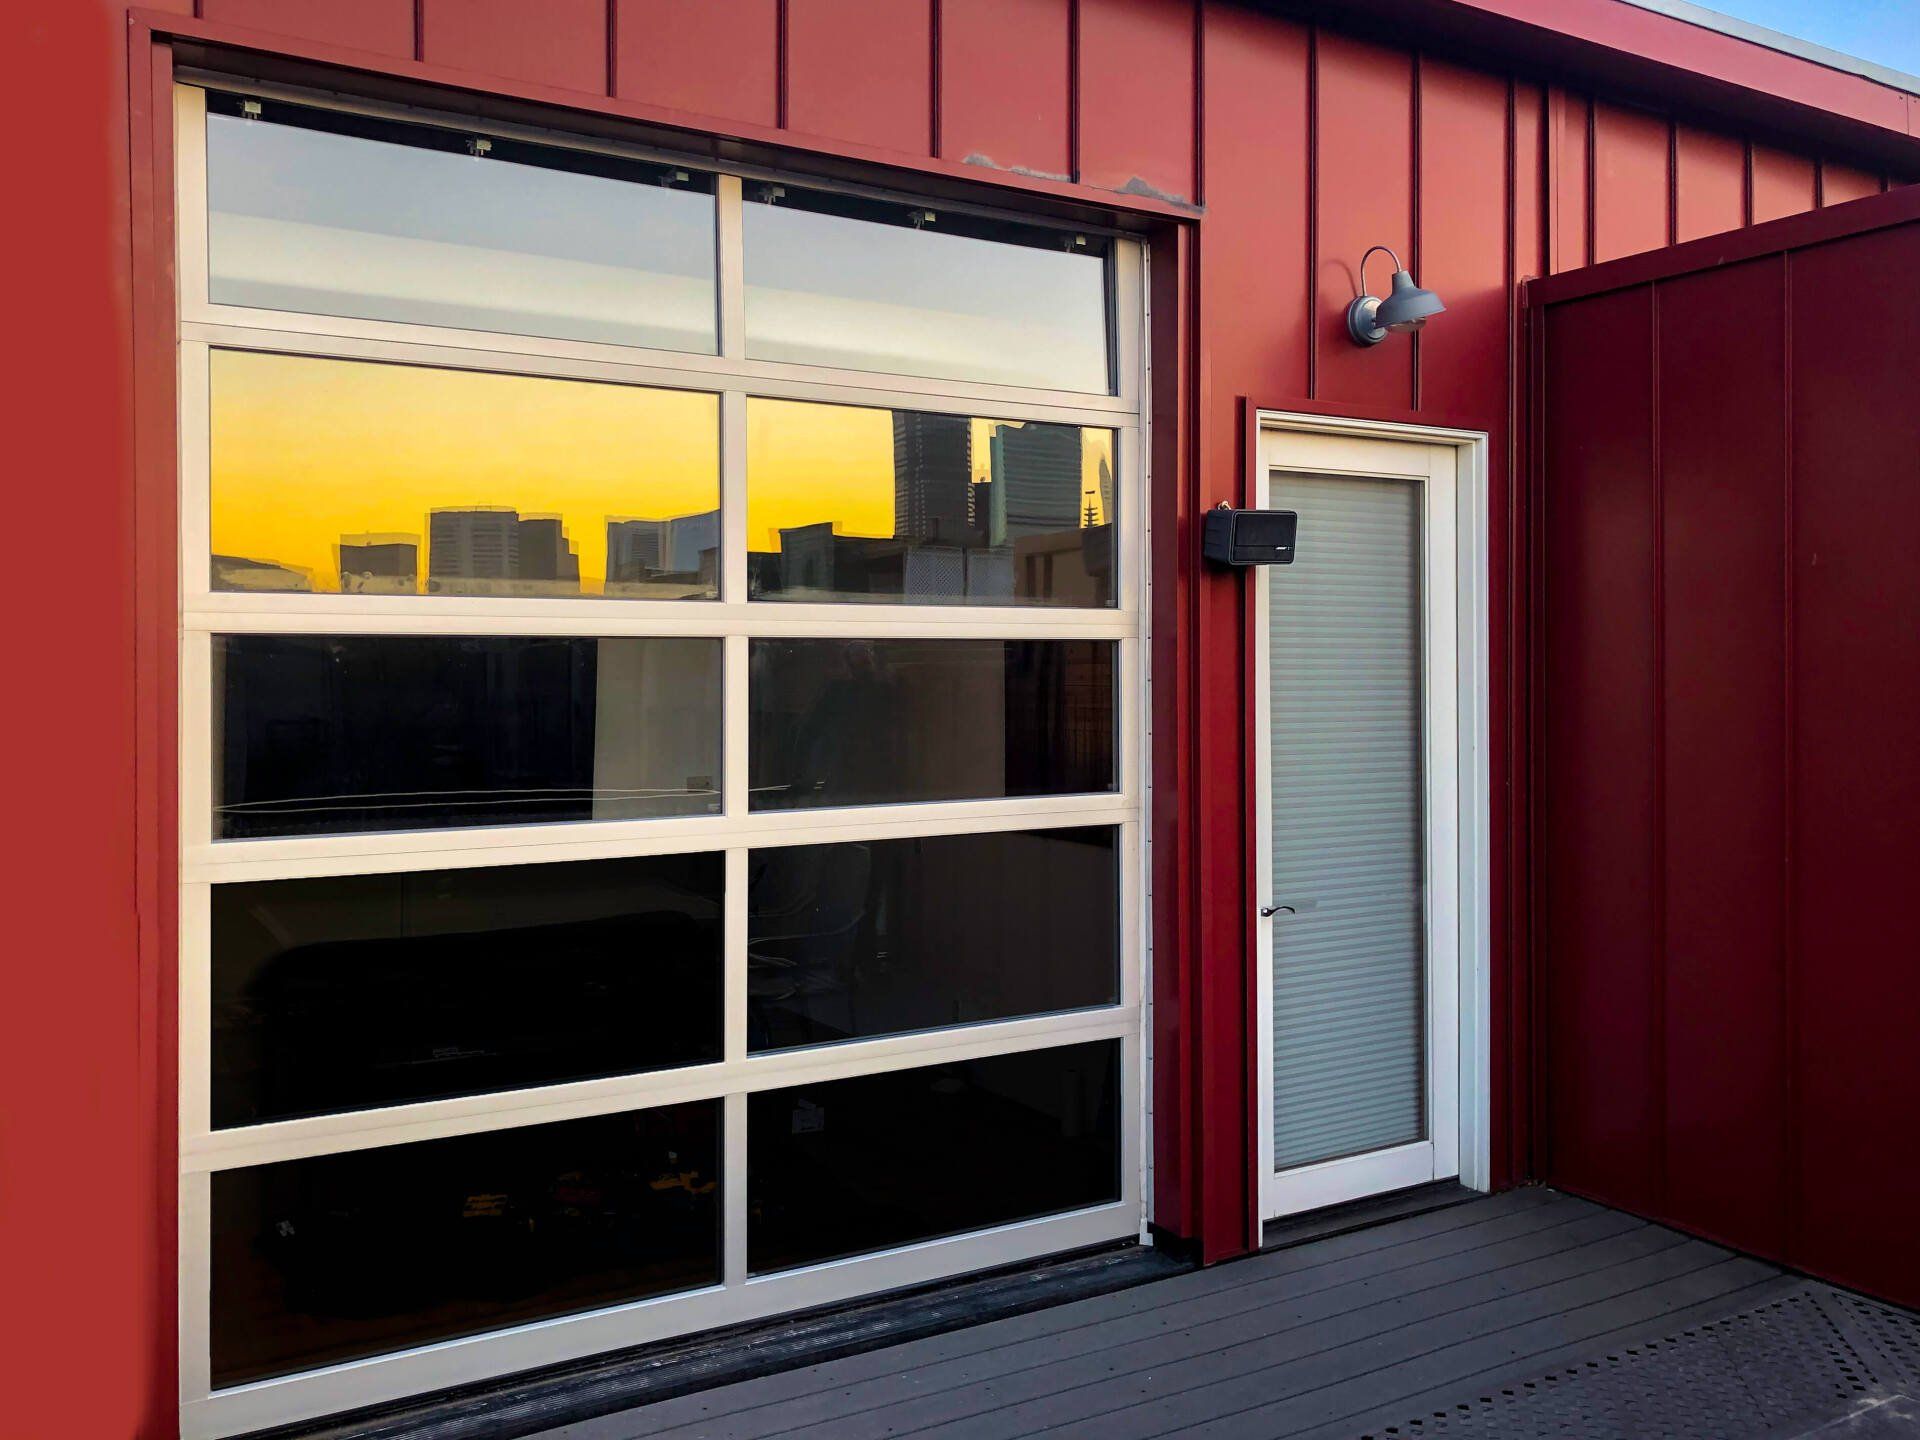 Ankmar full view garage door aluminum Denver skyline in reflection